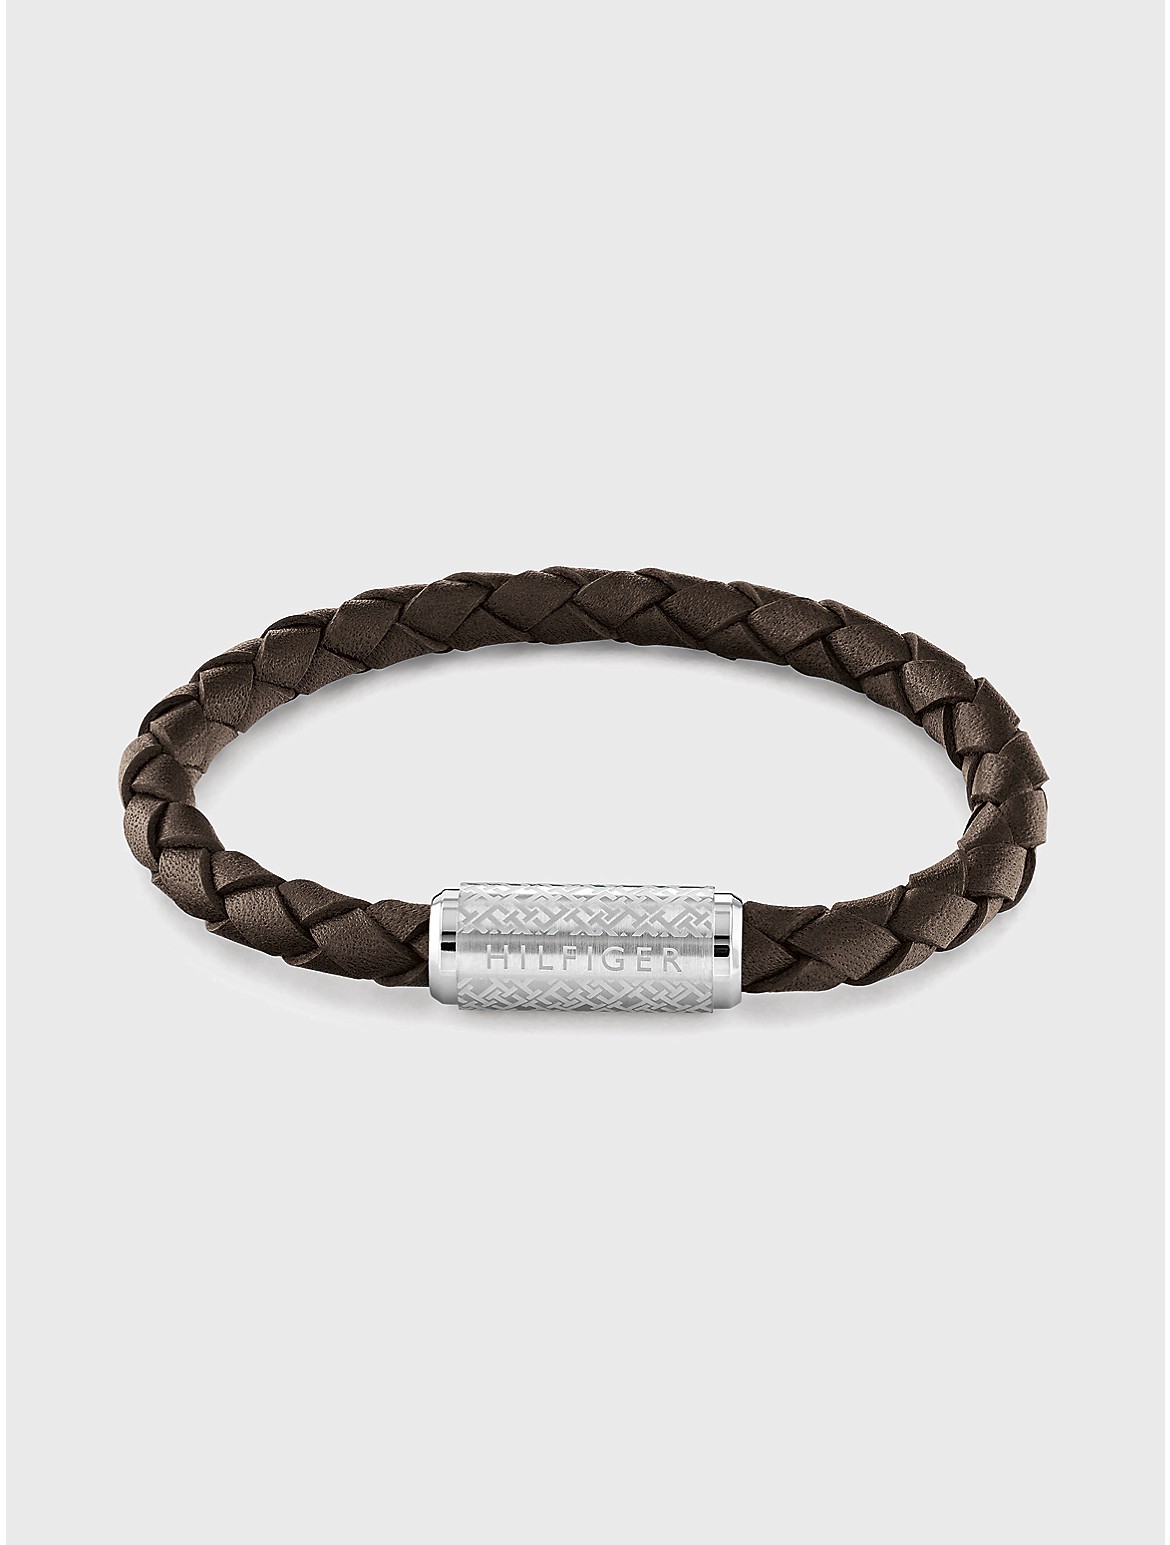 Tommy Hilfiger Men's Adjustable Braided Tobacco Leather Bracelet - Metallic